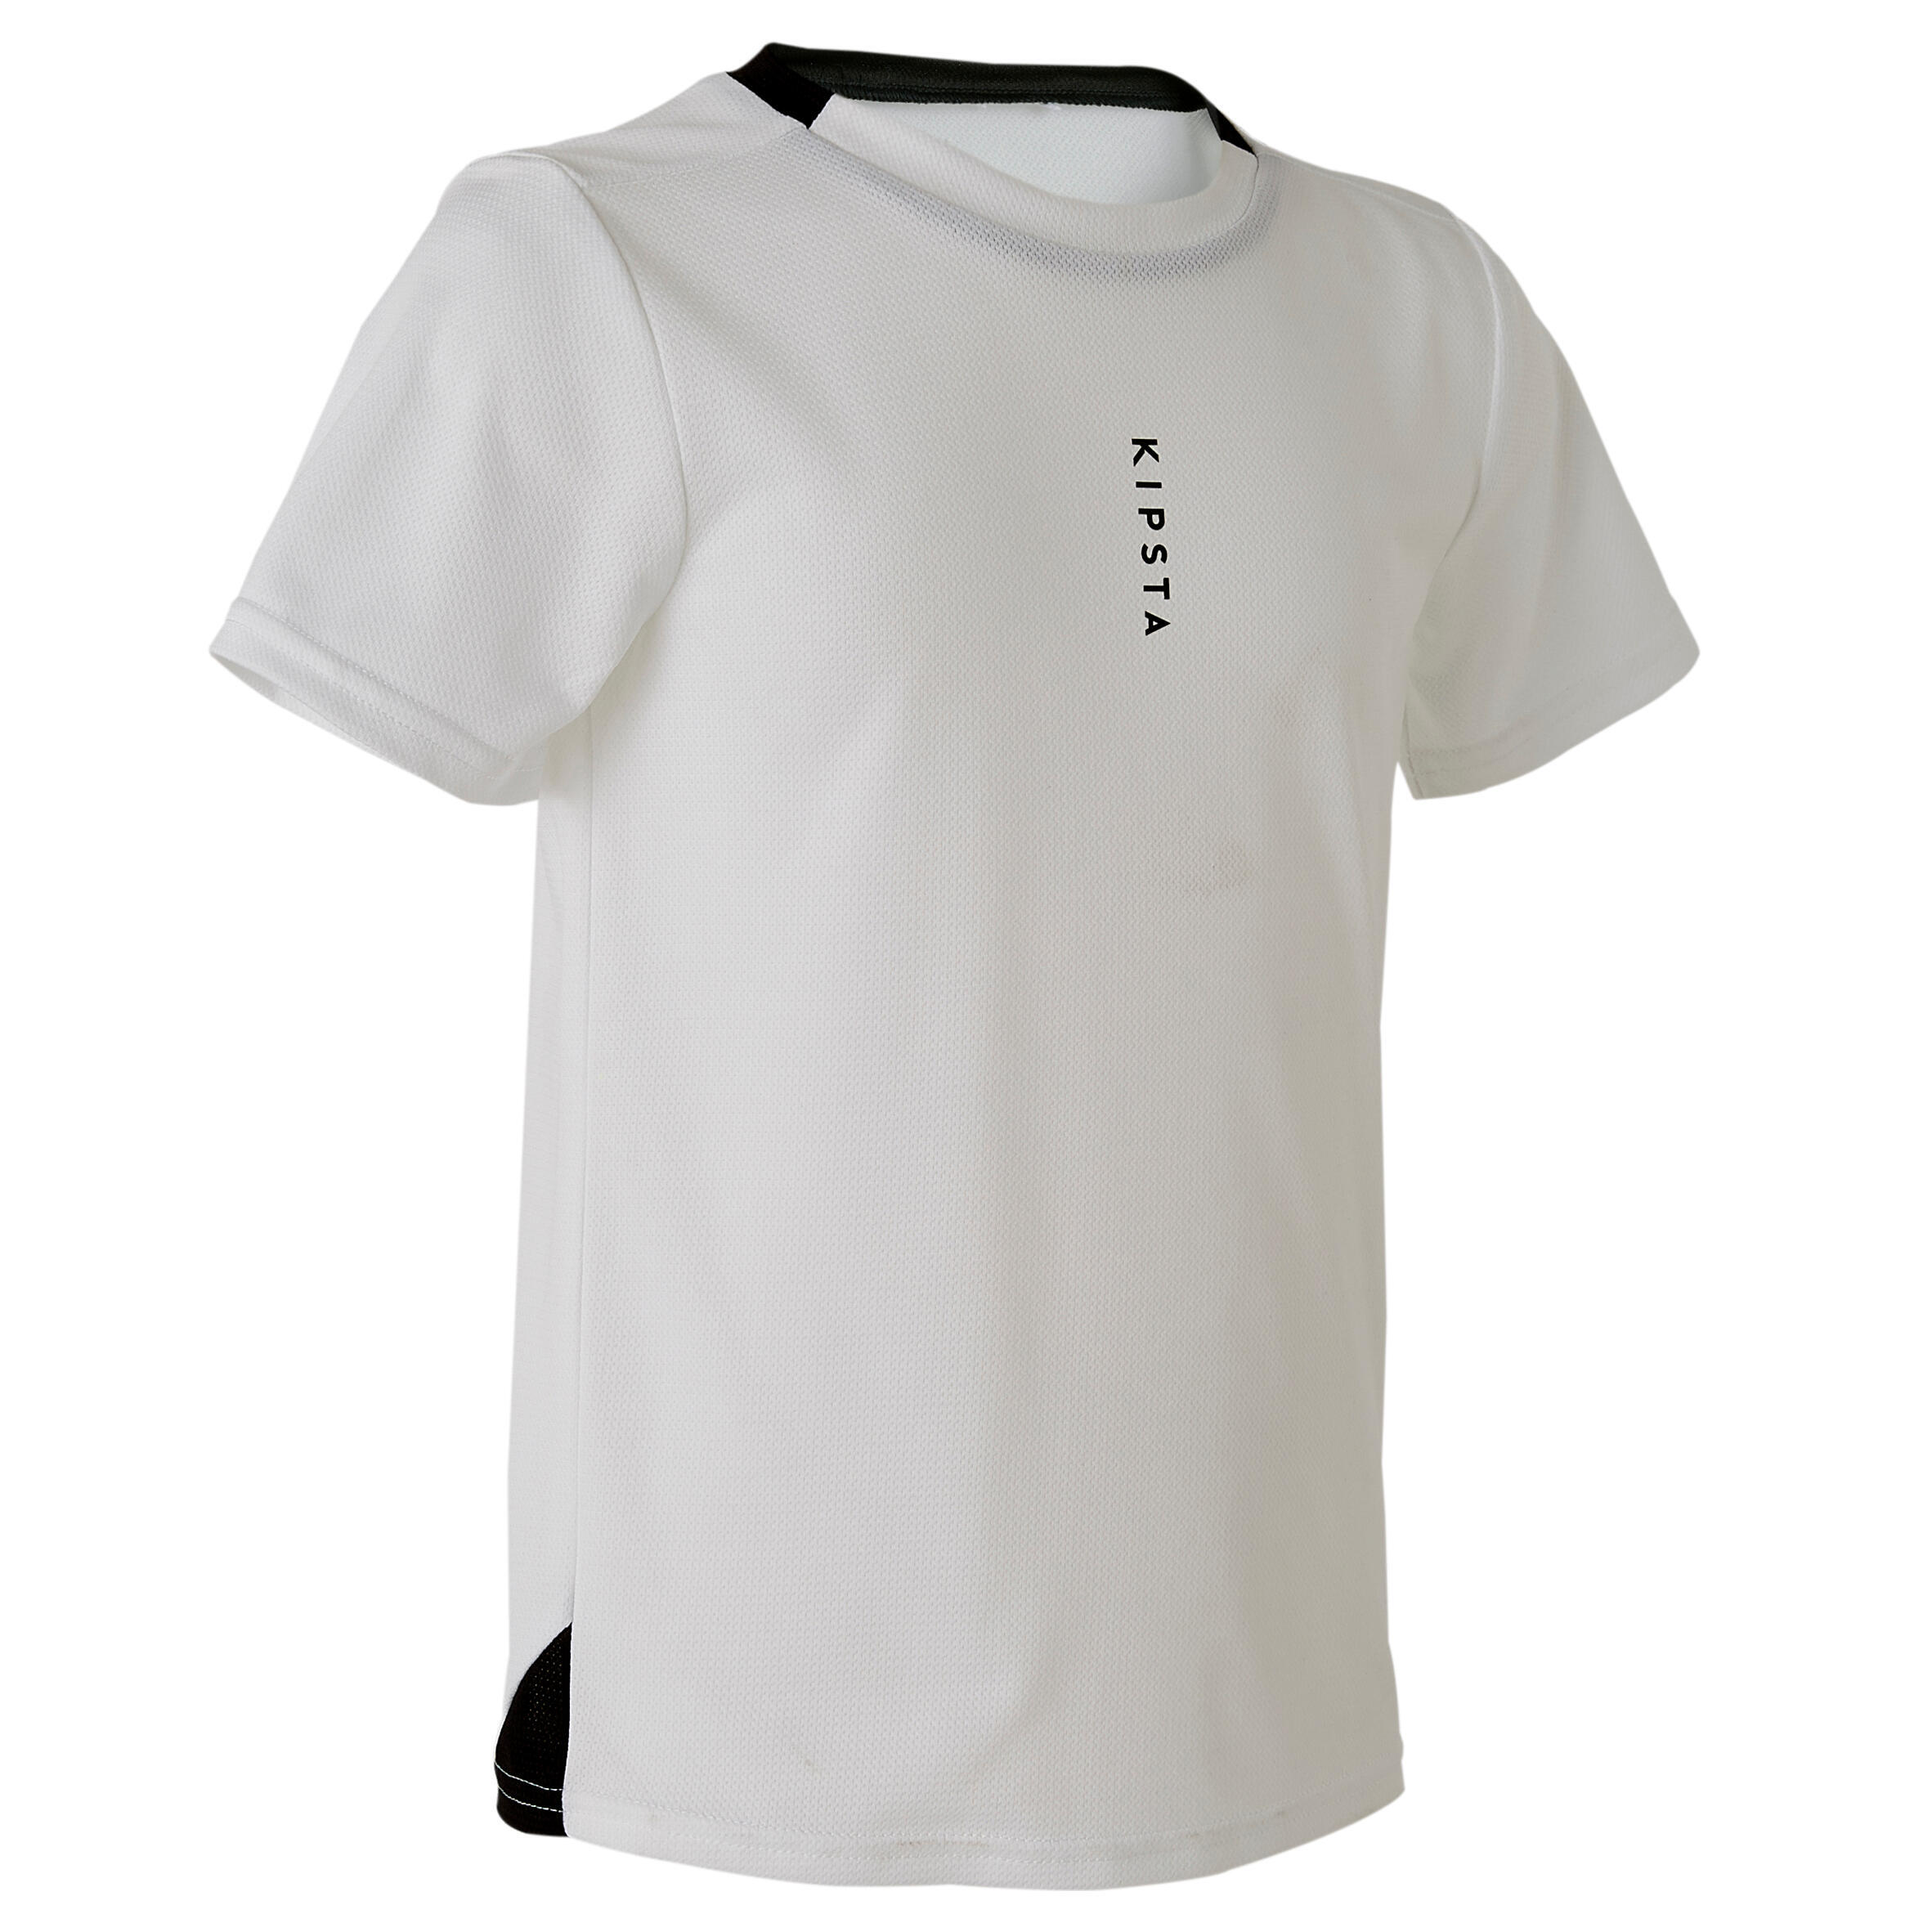 Refurbished Kids Football Shirt Essential - White - A Grade 1/7